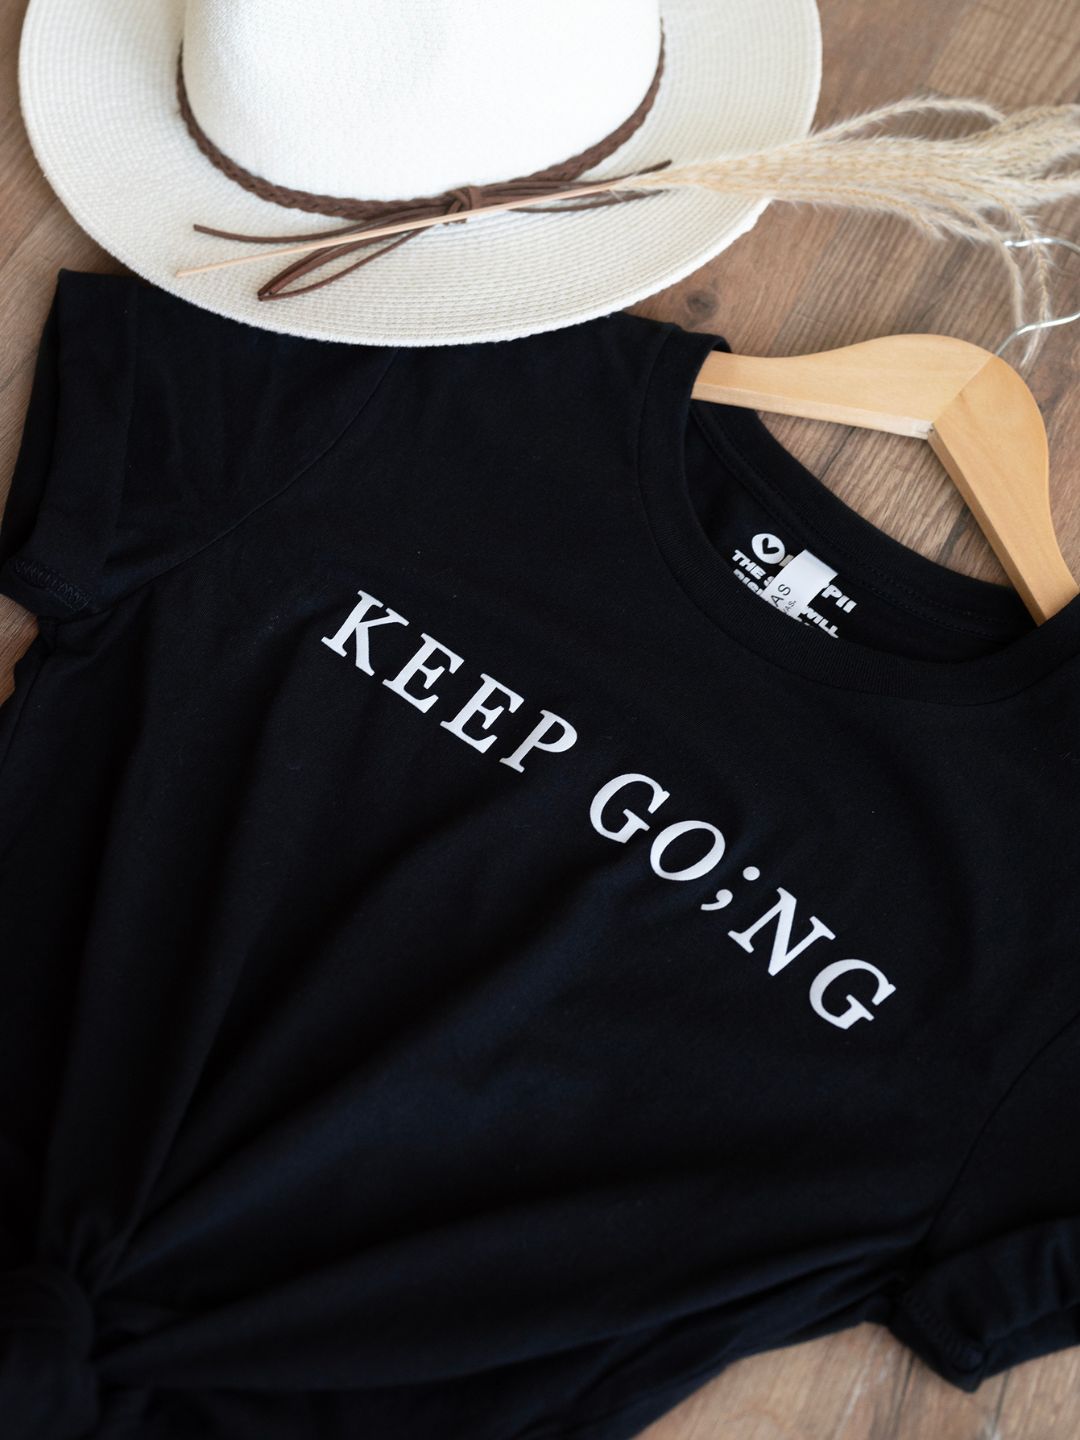 Keep Go;ng Semicolon | Unisex Eco T-Shirt